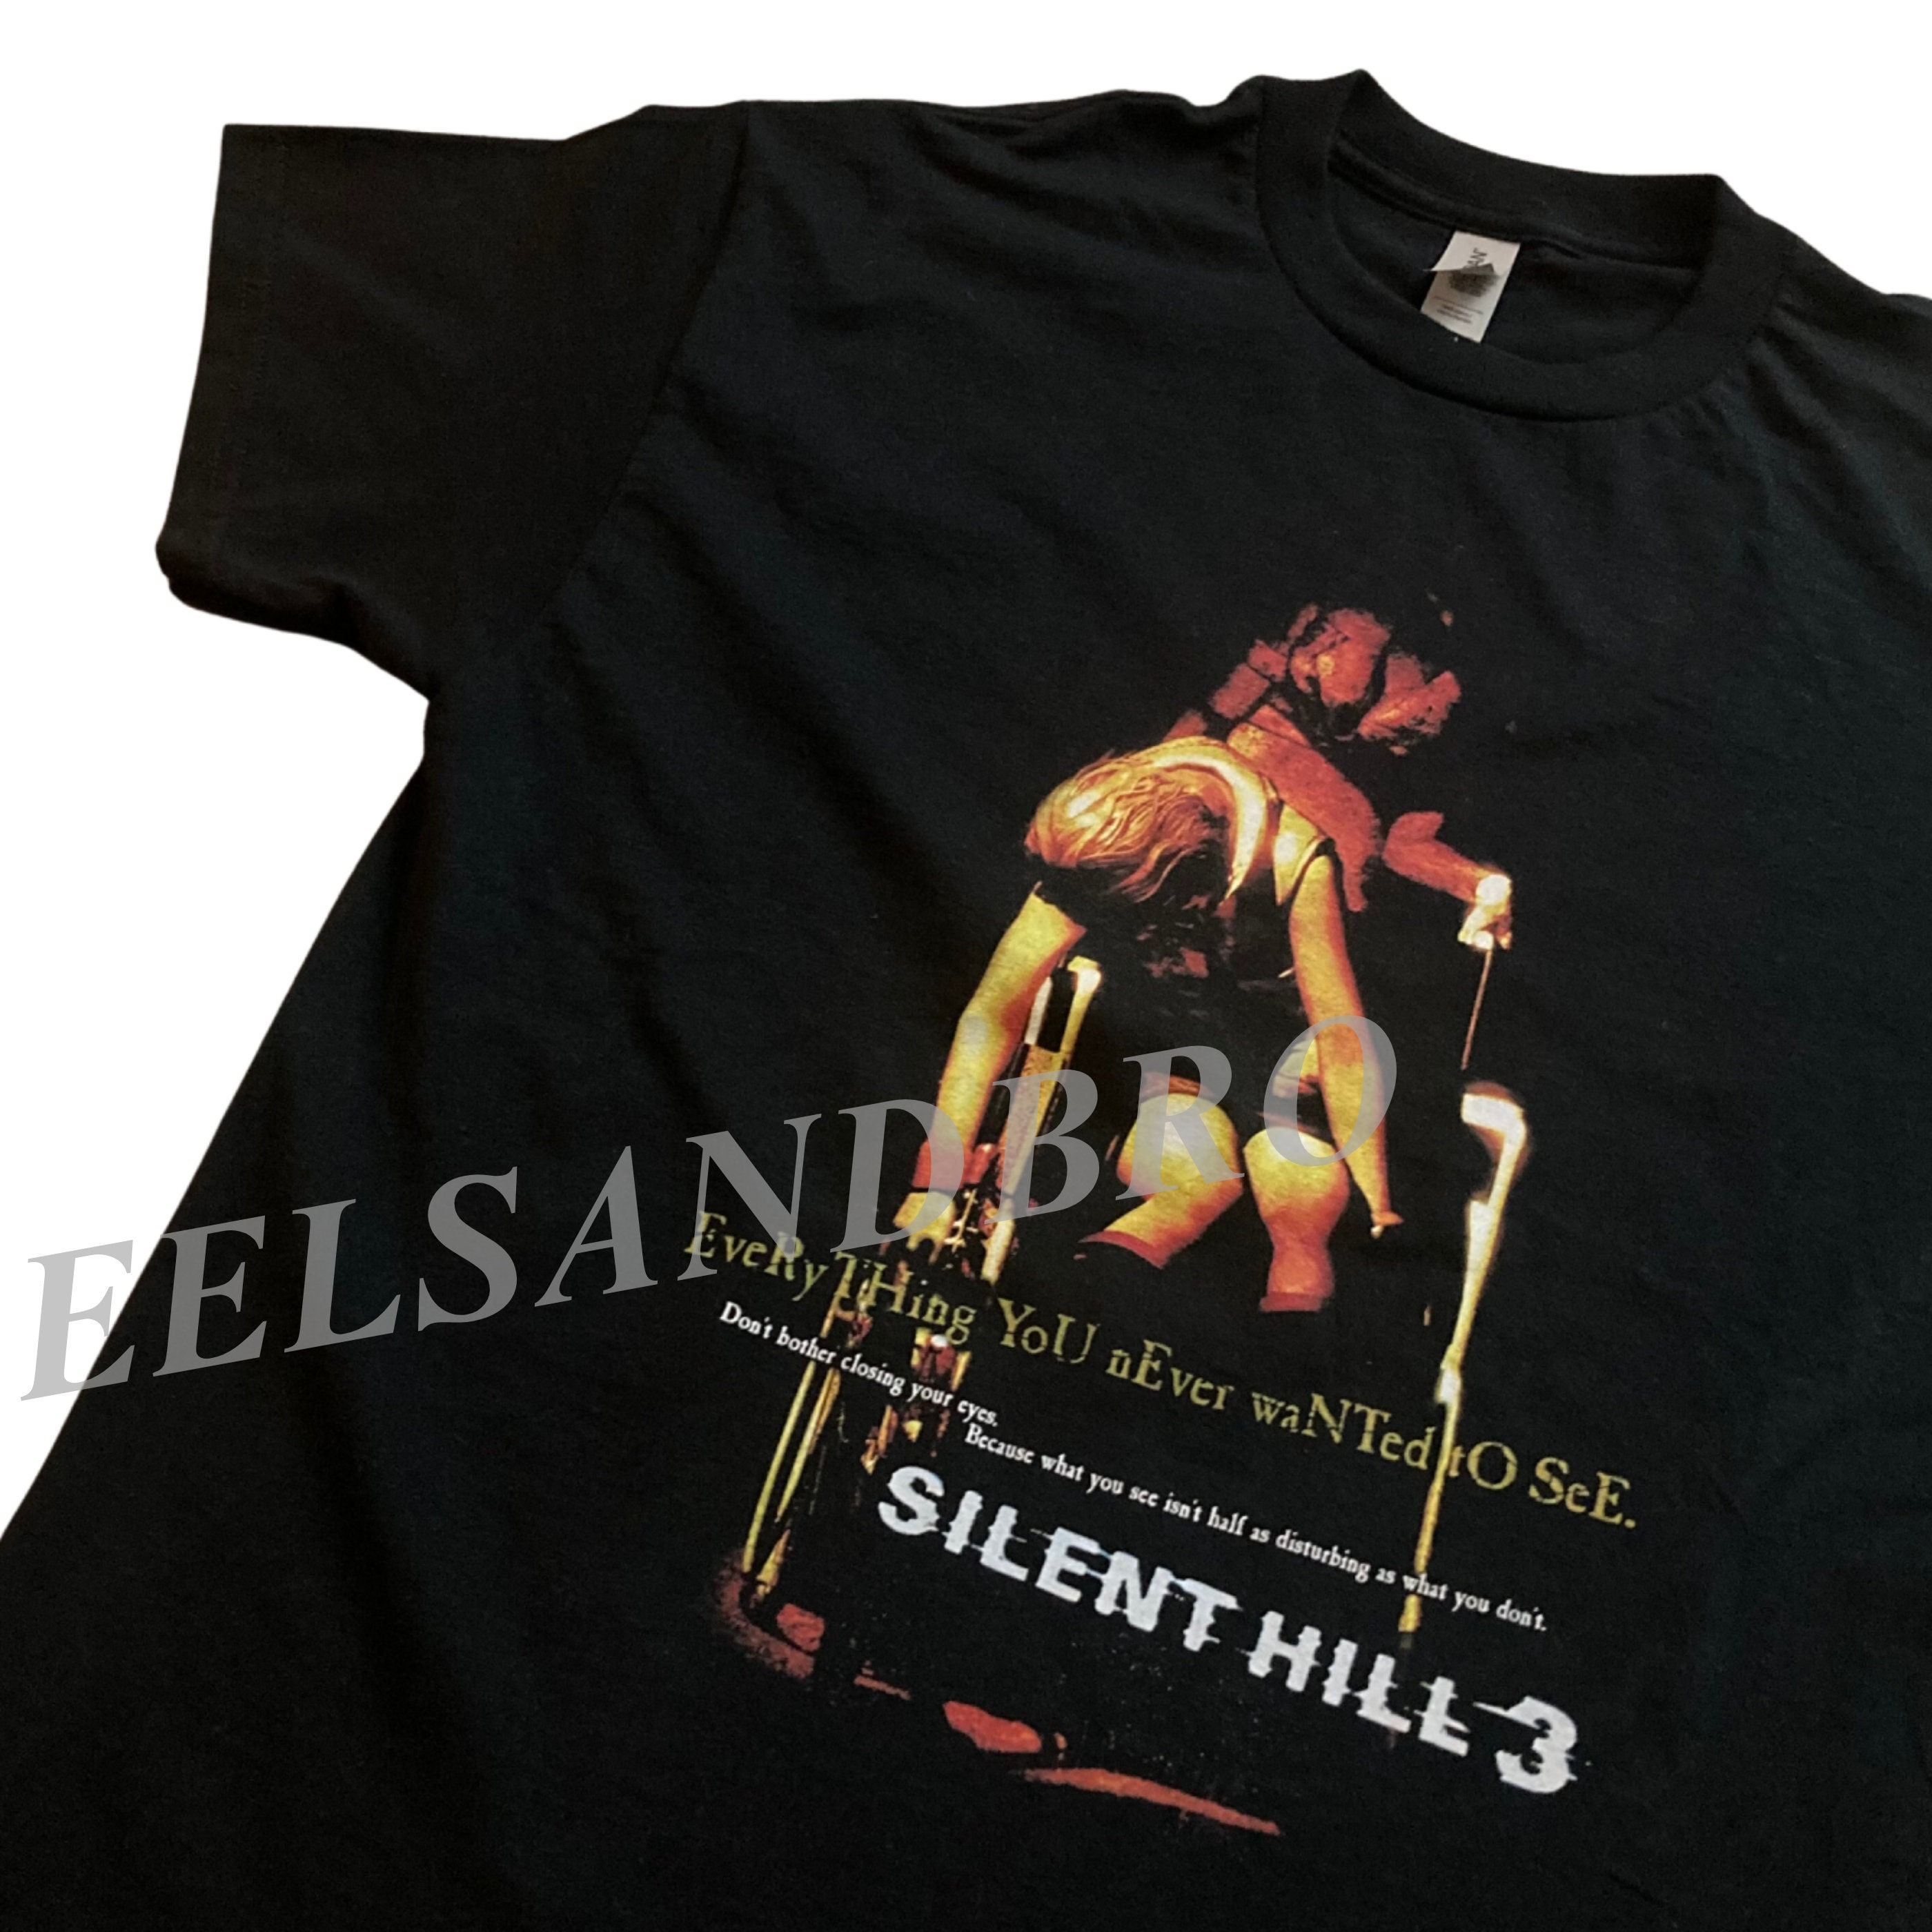 Silent Hill – Old Games Store – Loja de RetroGaming Portuguesa